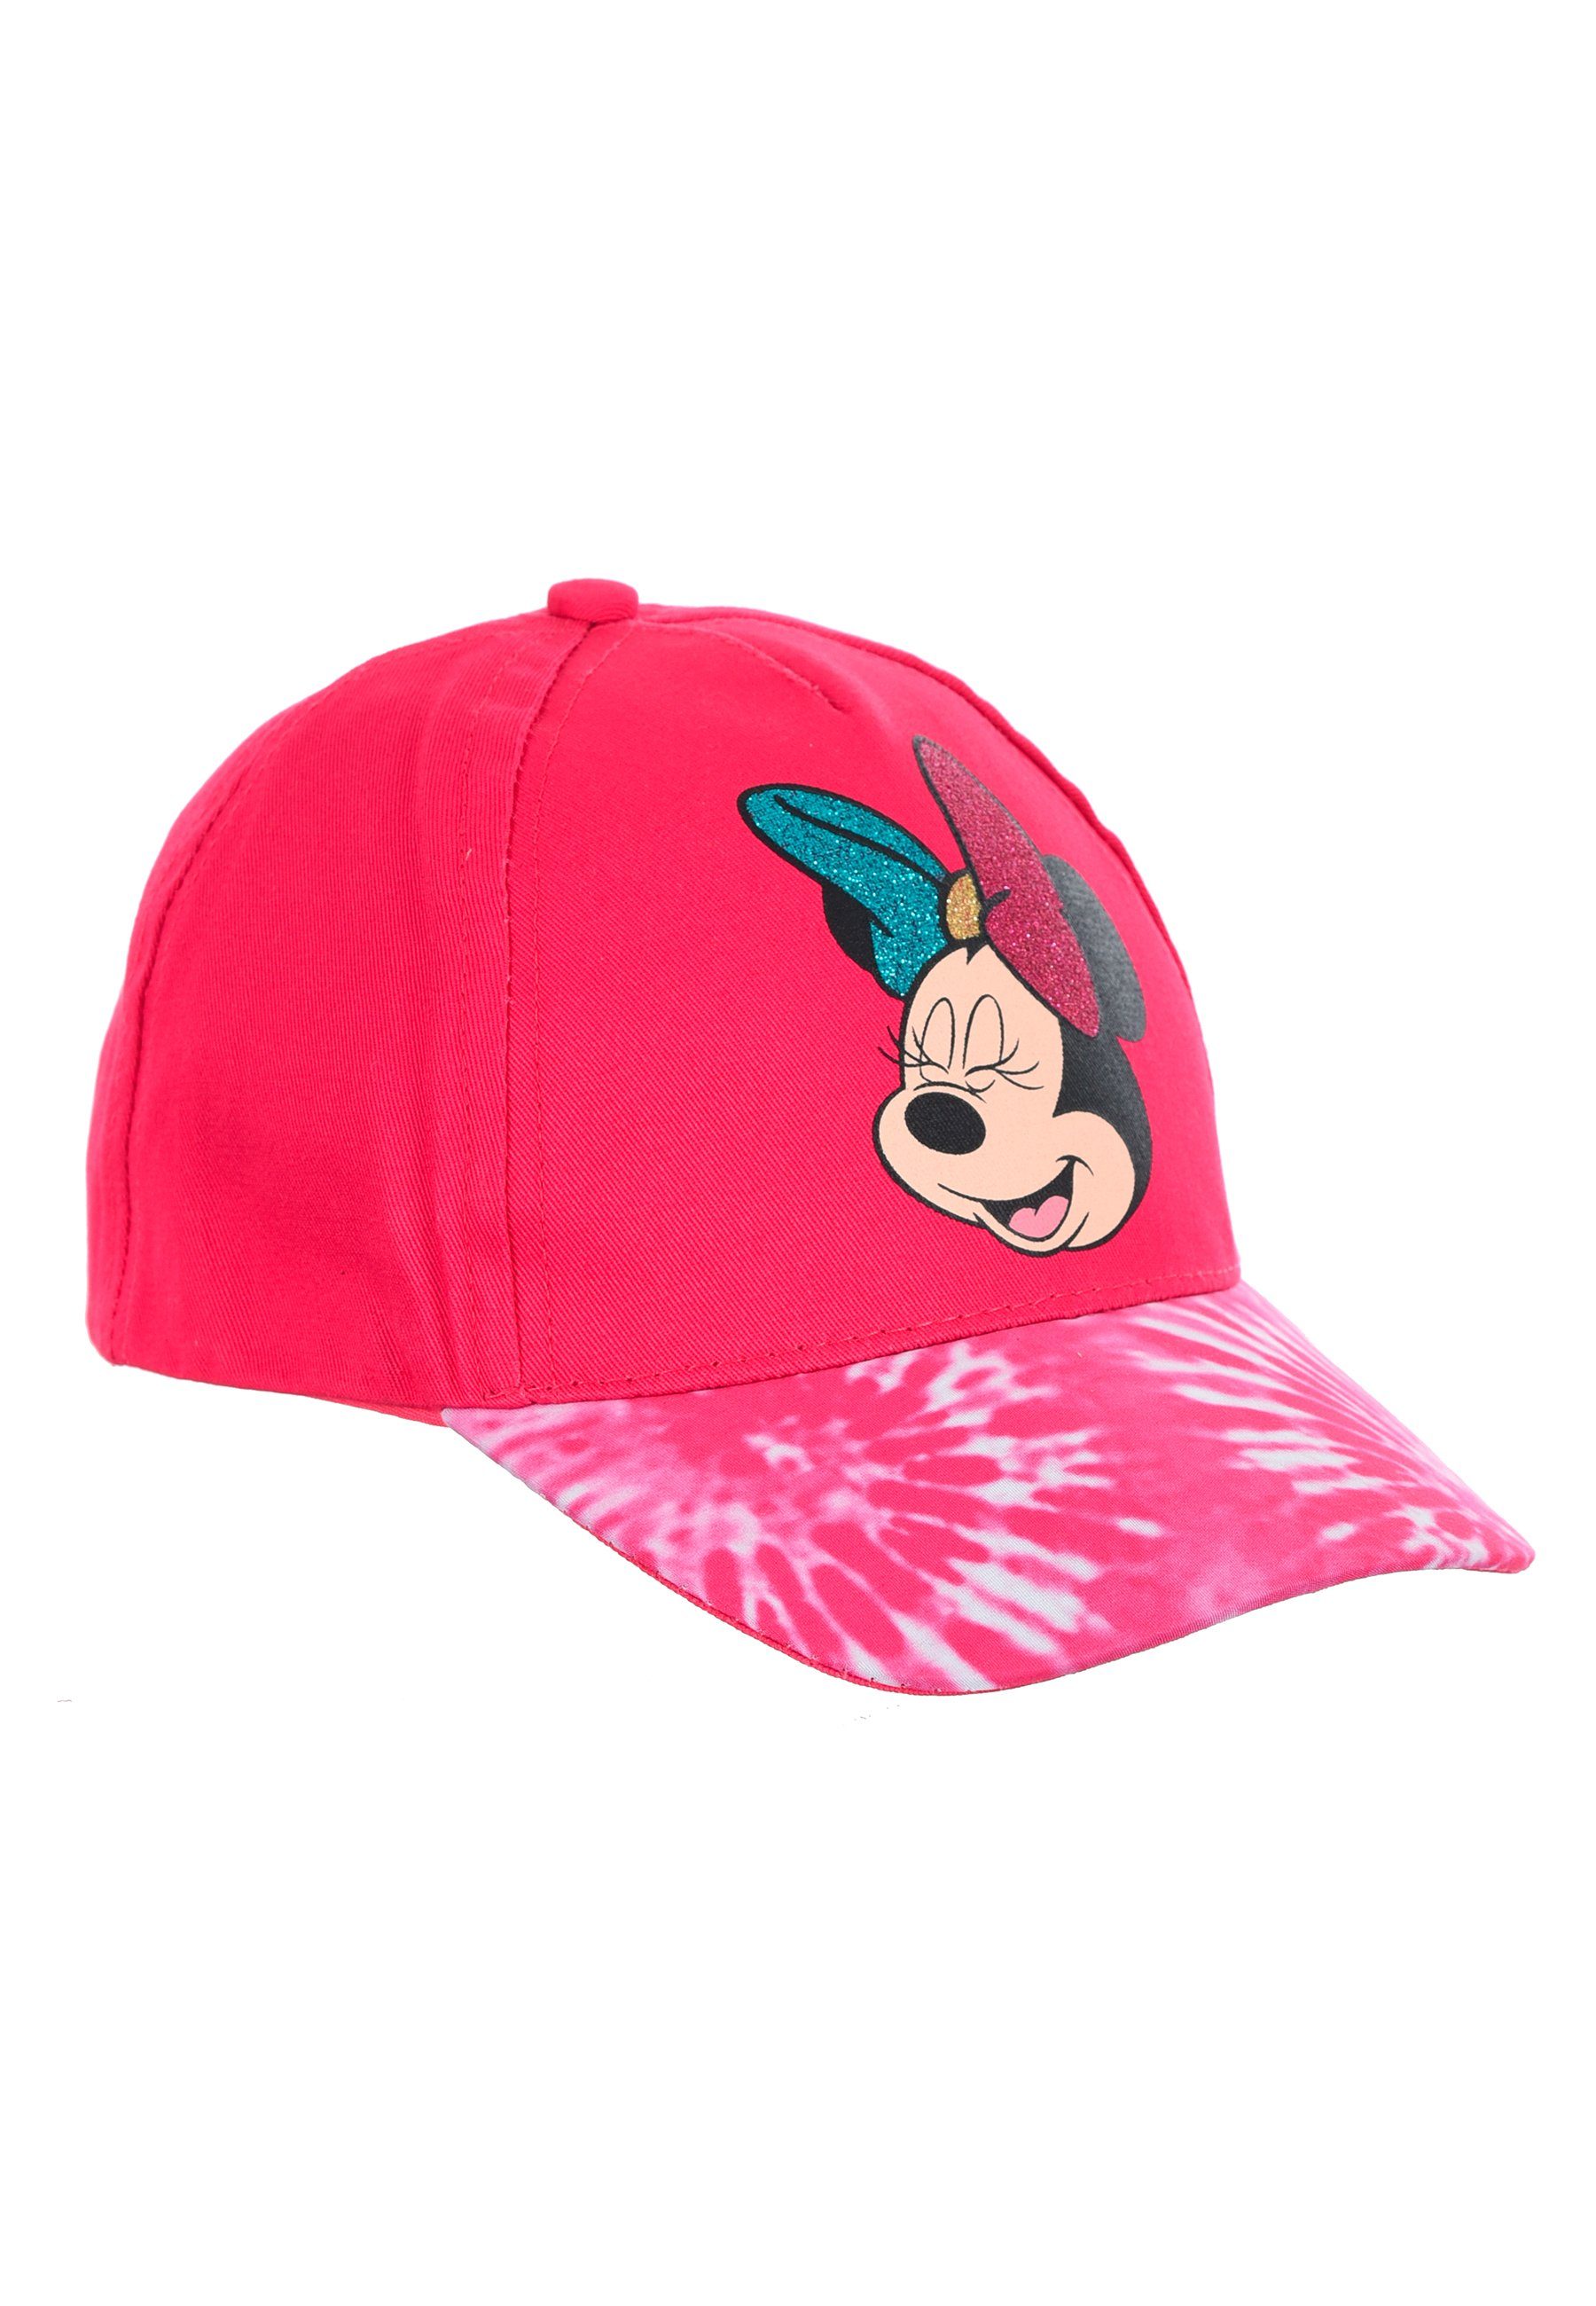 Mouse Cap Pink Minnie Kappe Mütze Disney Minnie Baseball